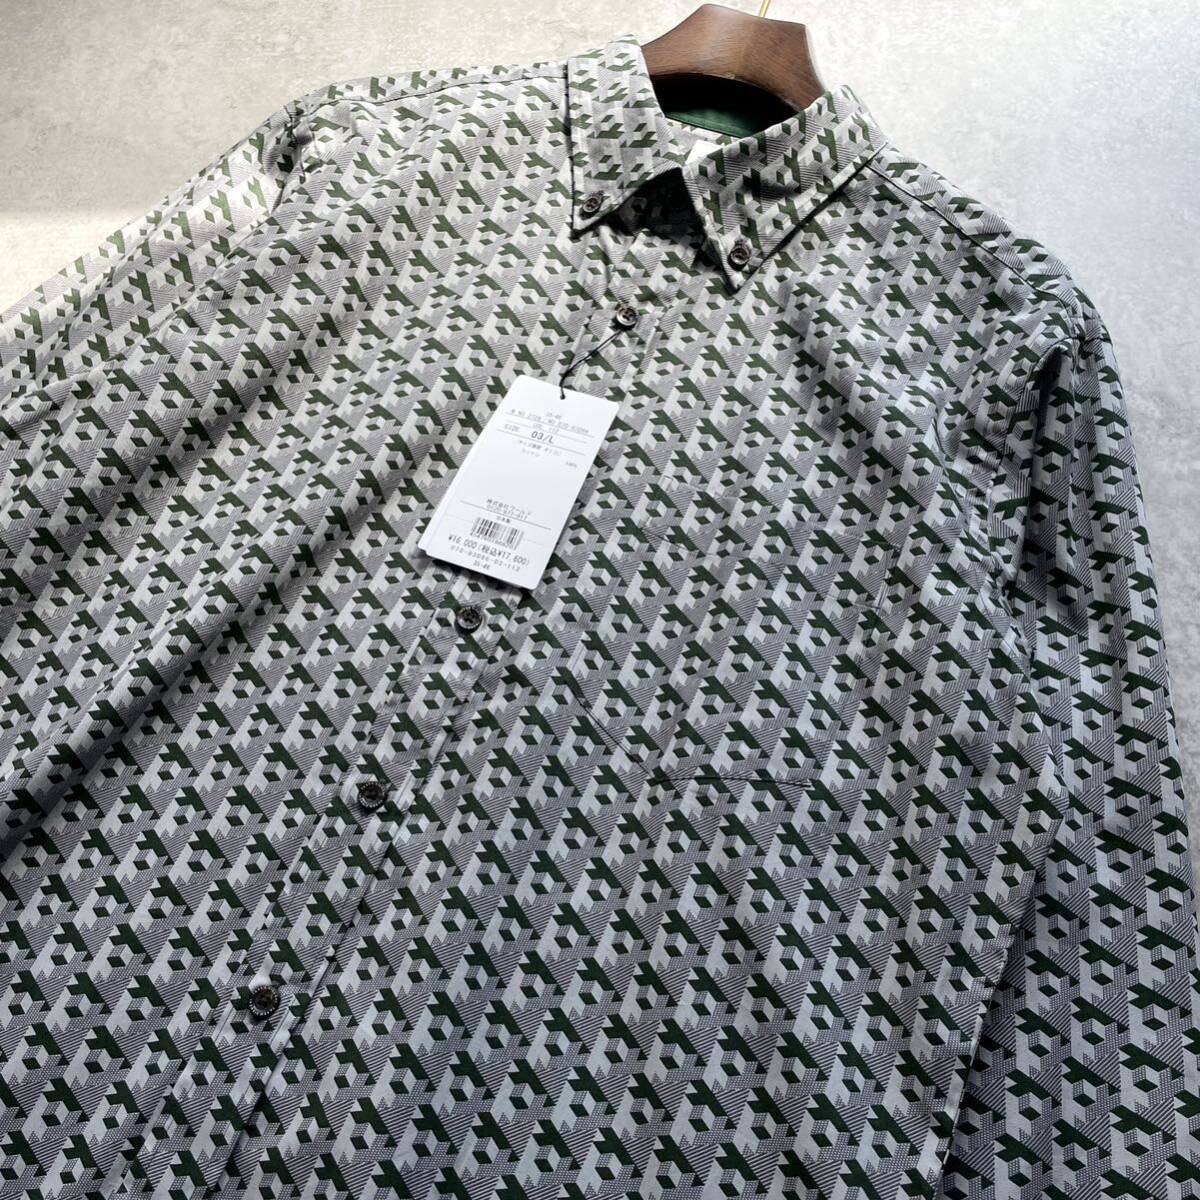  unused tag attaching #TAKEO KIKUCHI Takeo Kikuchi L size . what . pattern total pattern shirt button down long sleeve gray green men's regular price 17,600 jpy 